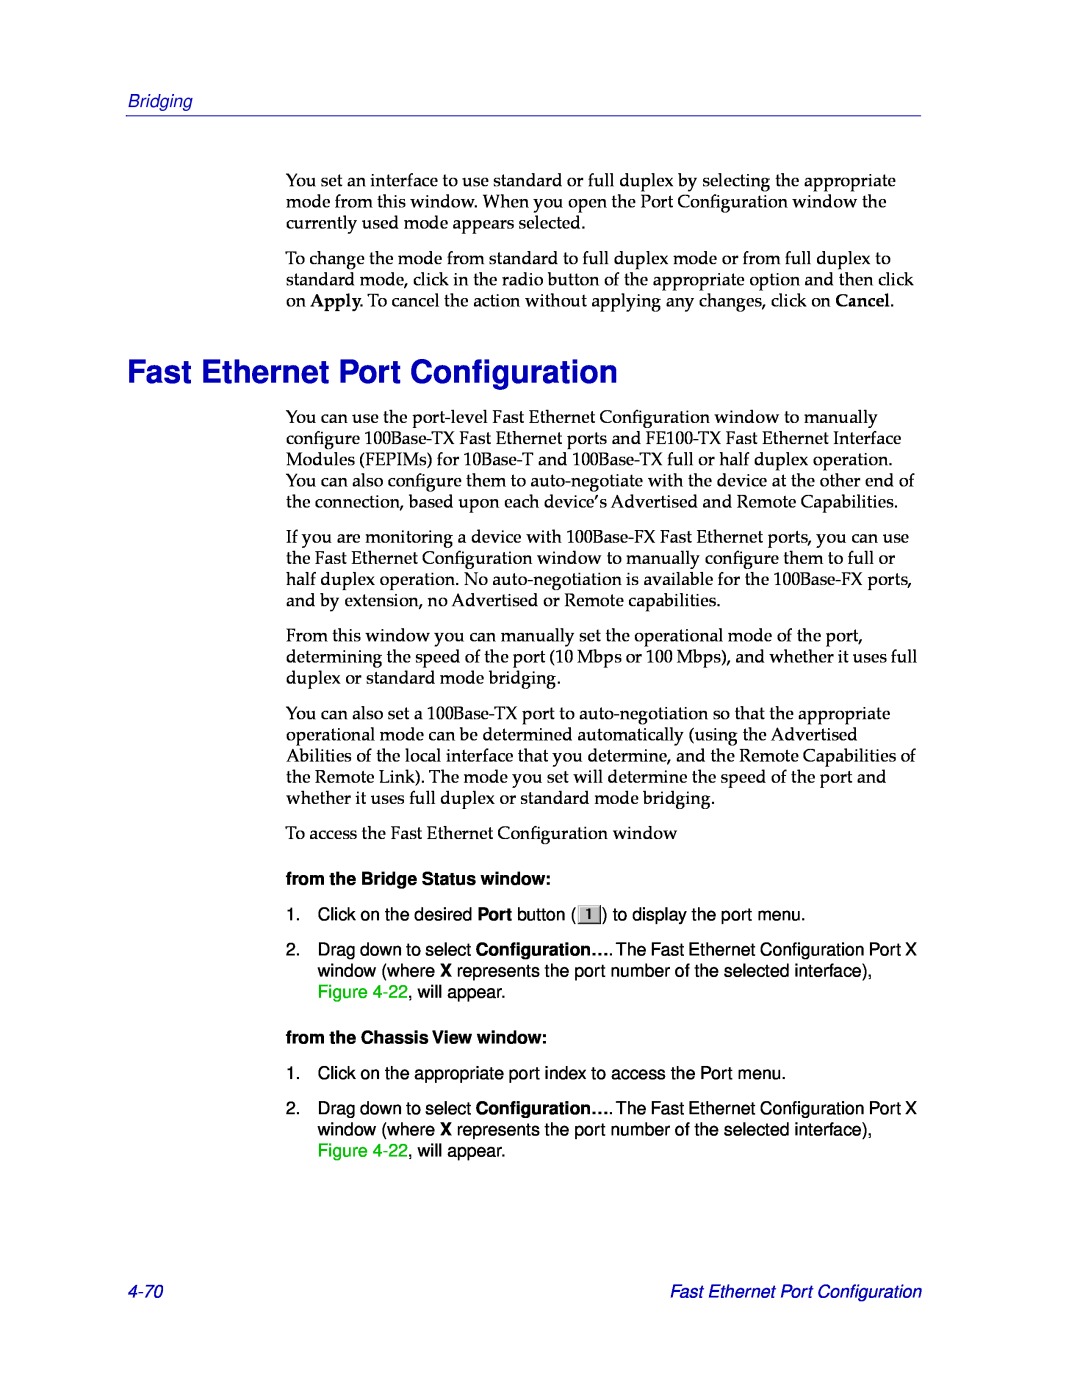 Cabletron Systems CSX400, CSX200 manual Fast Ethernet Port Conﬁguration, 4-70, Bridging, from the Bridge Status window 